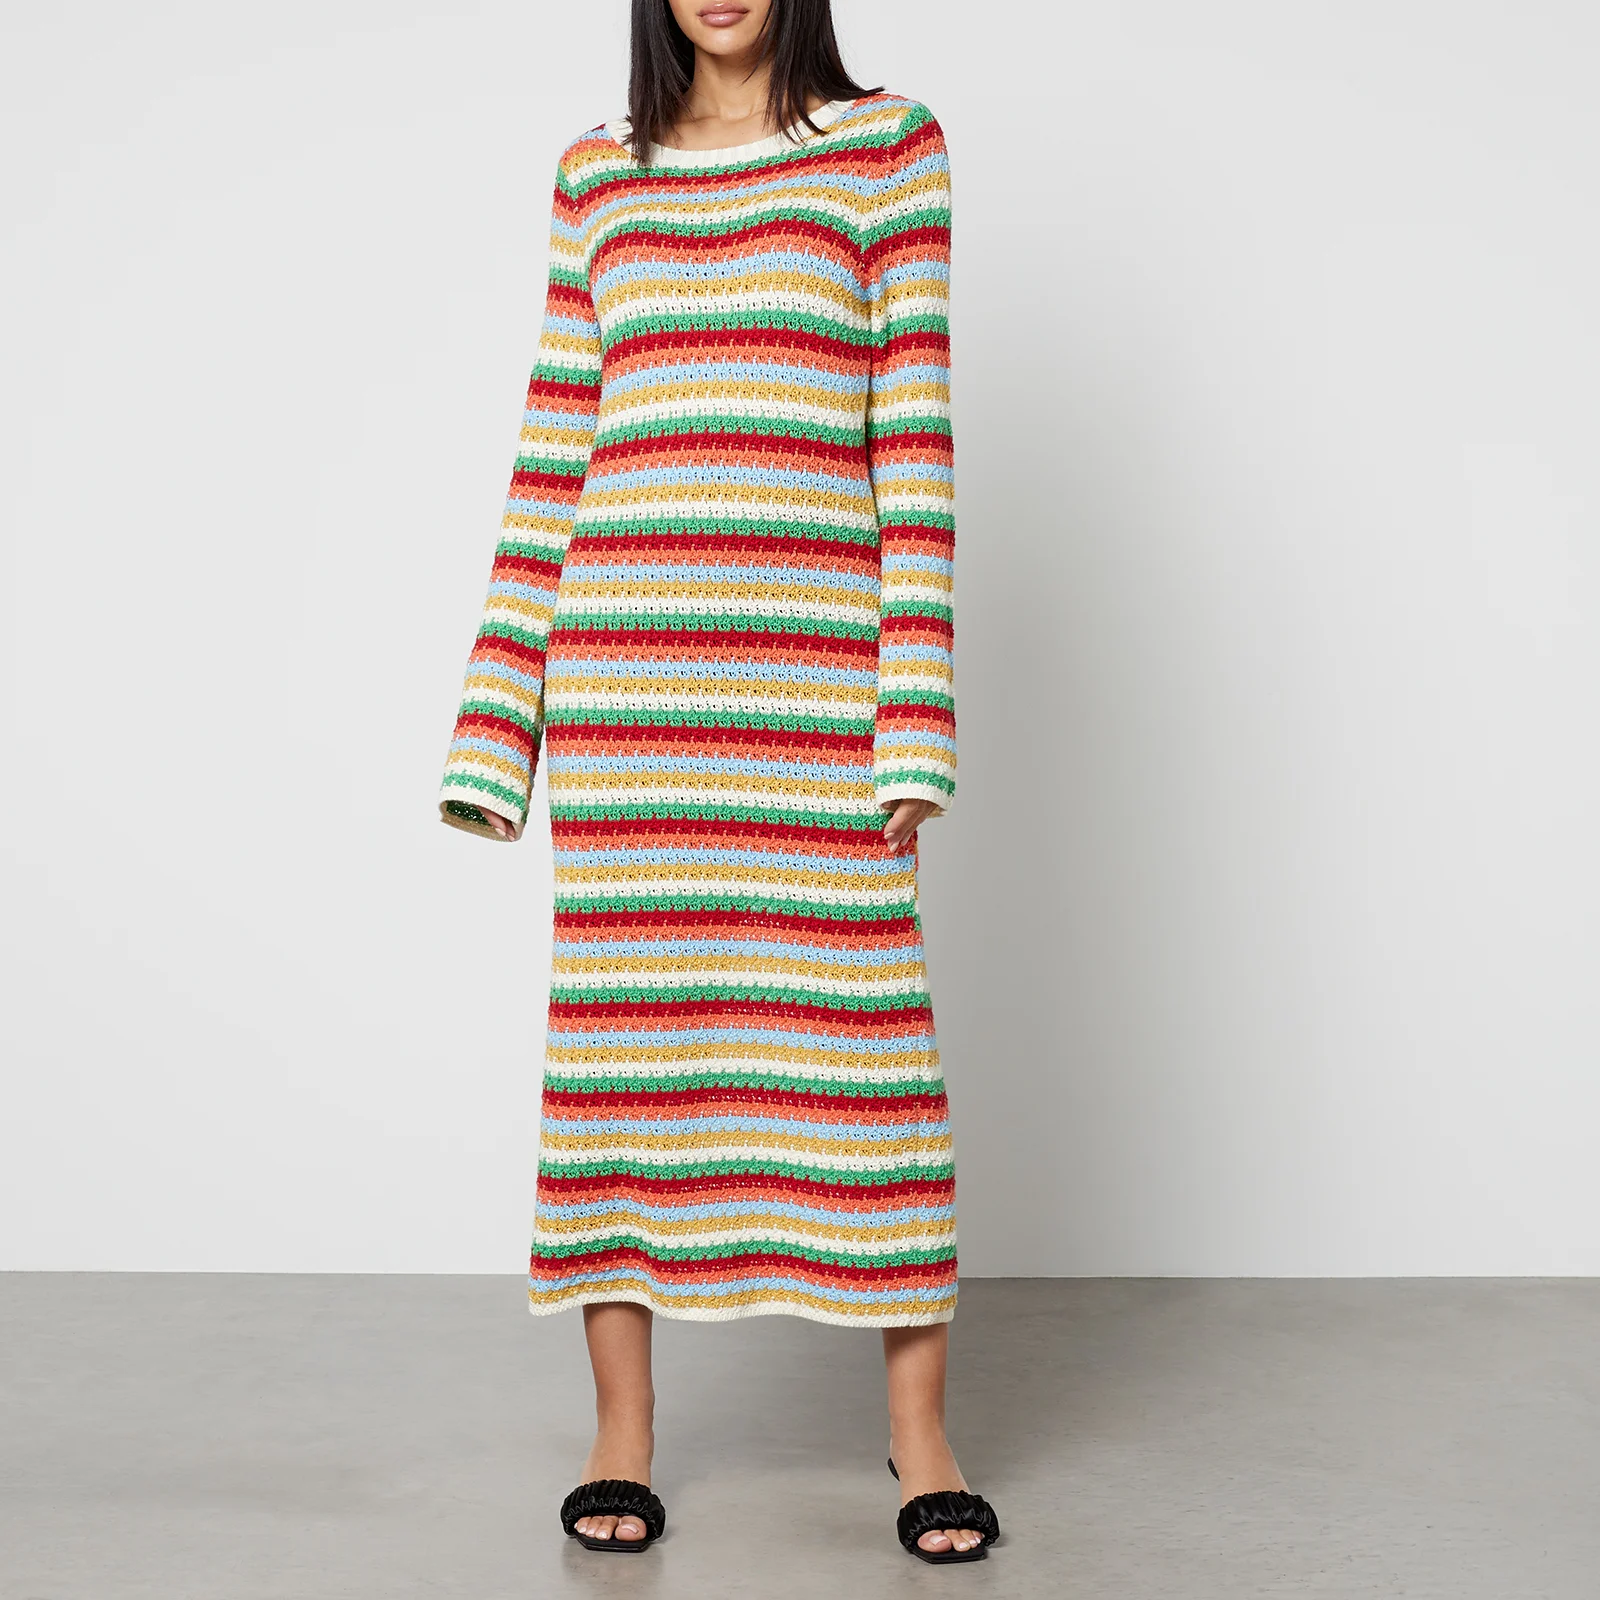 Kitri Nadine Striped Crocheted Midi Dress Image 1